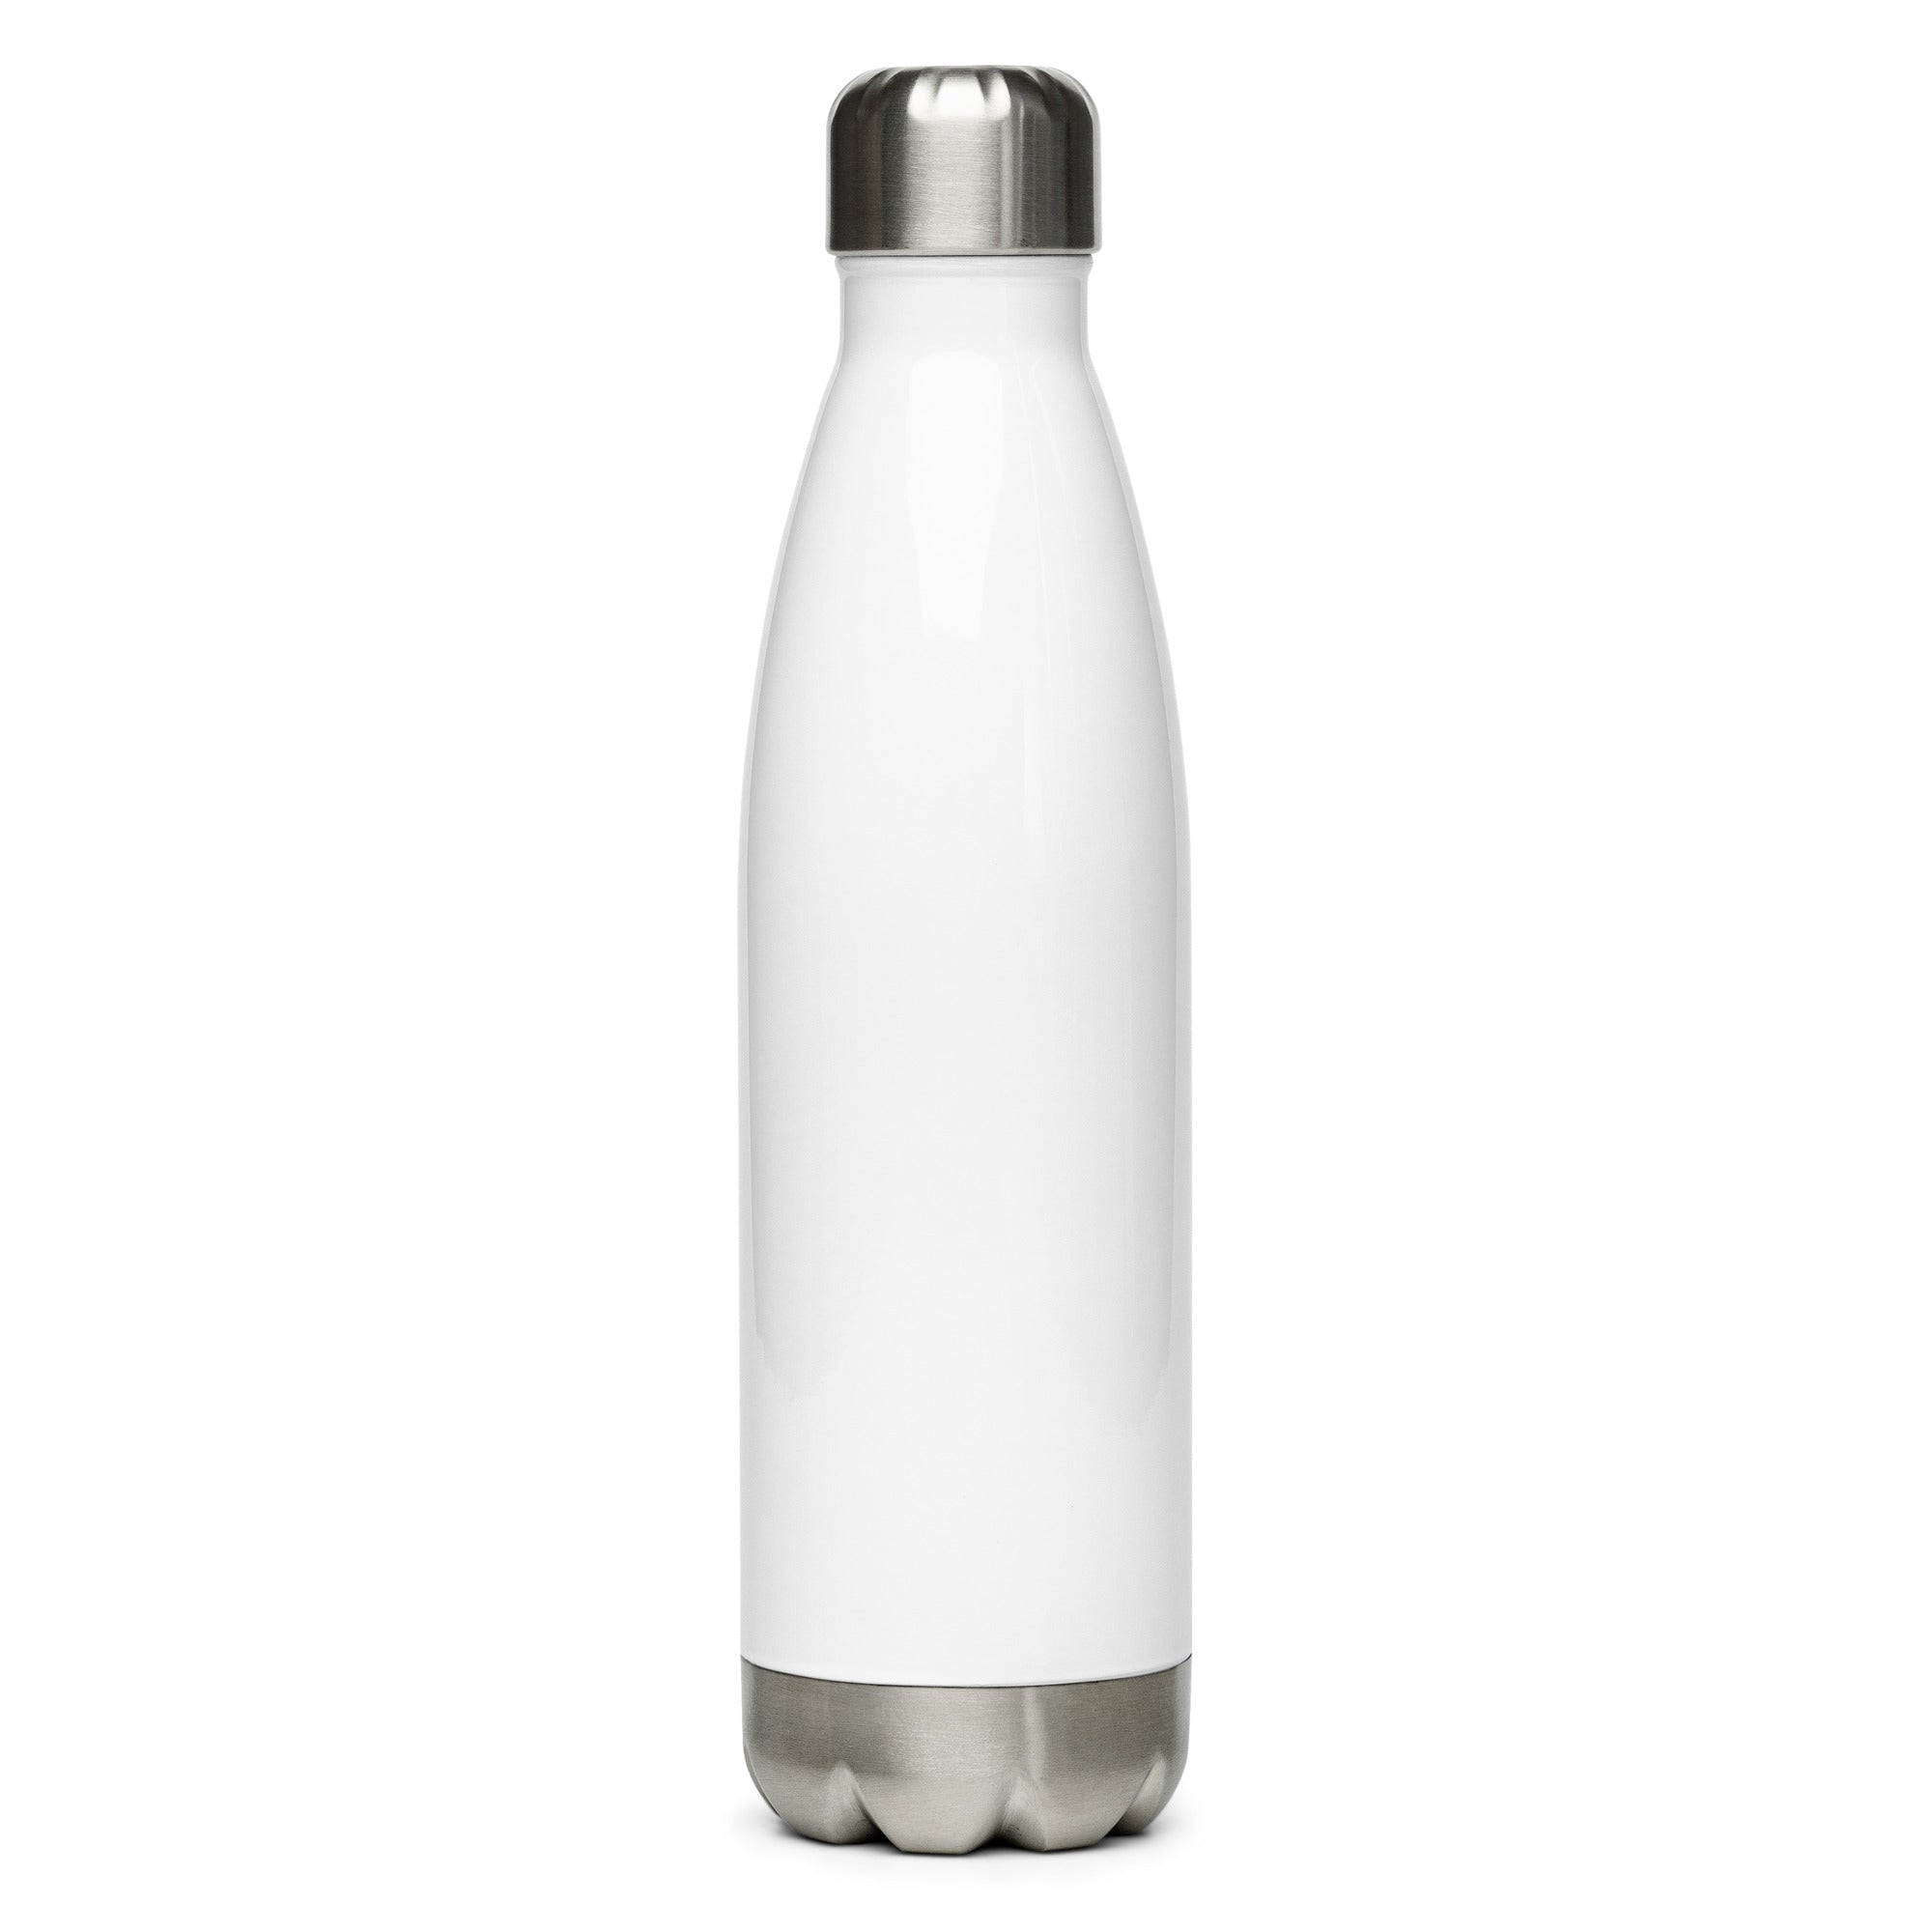 Stainless Steel Water Bottle 3